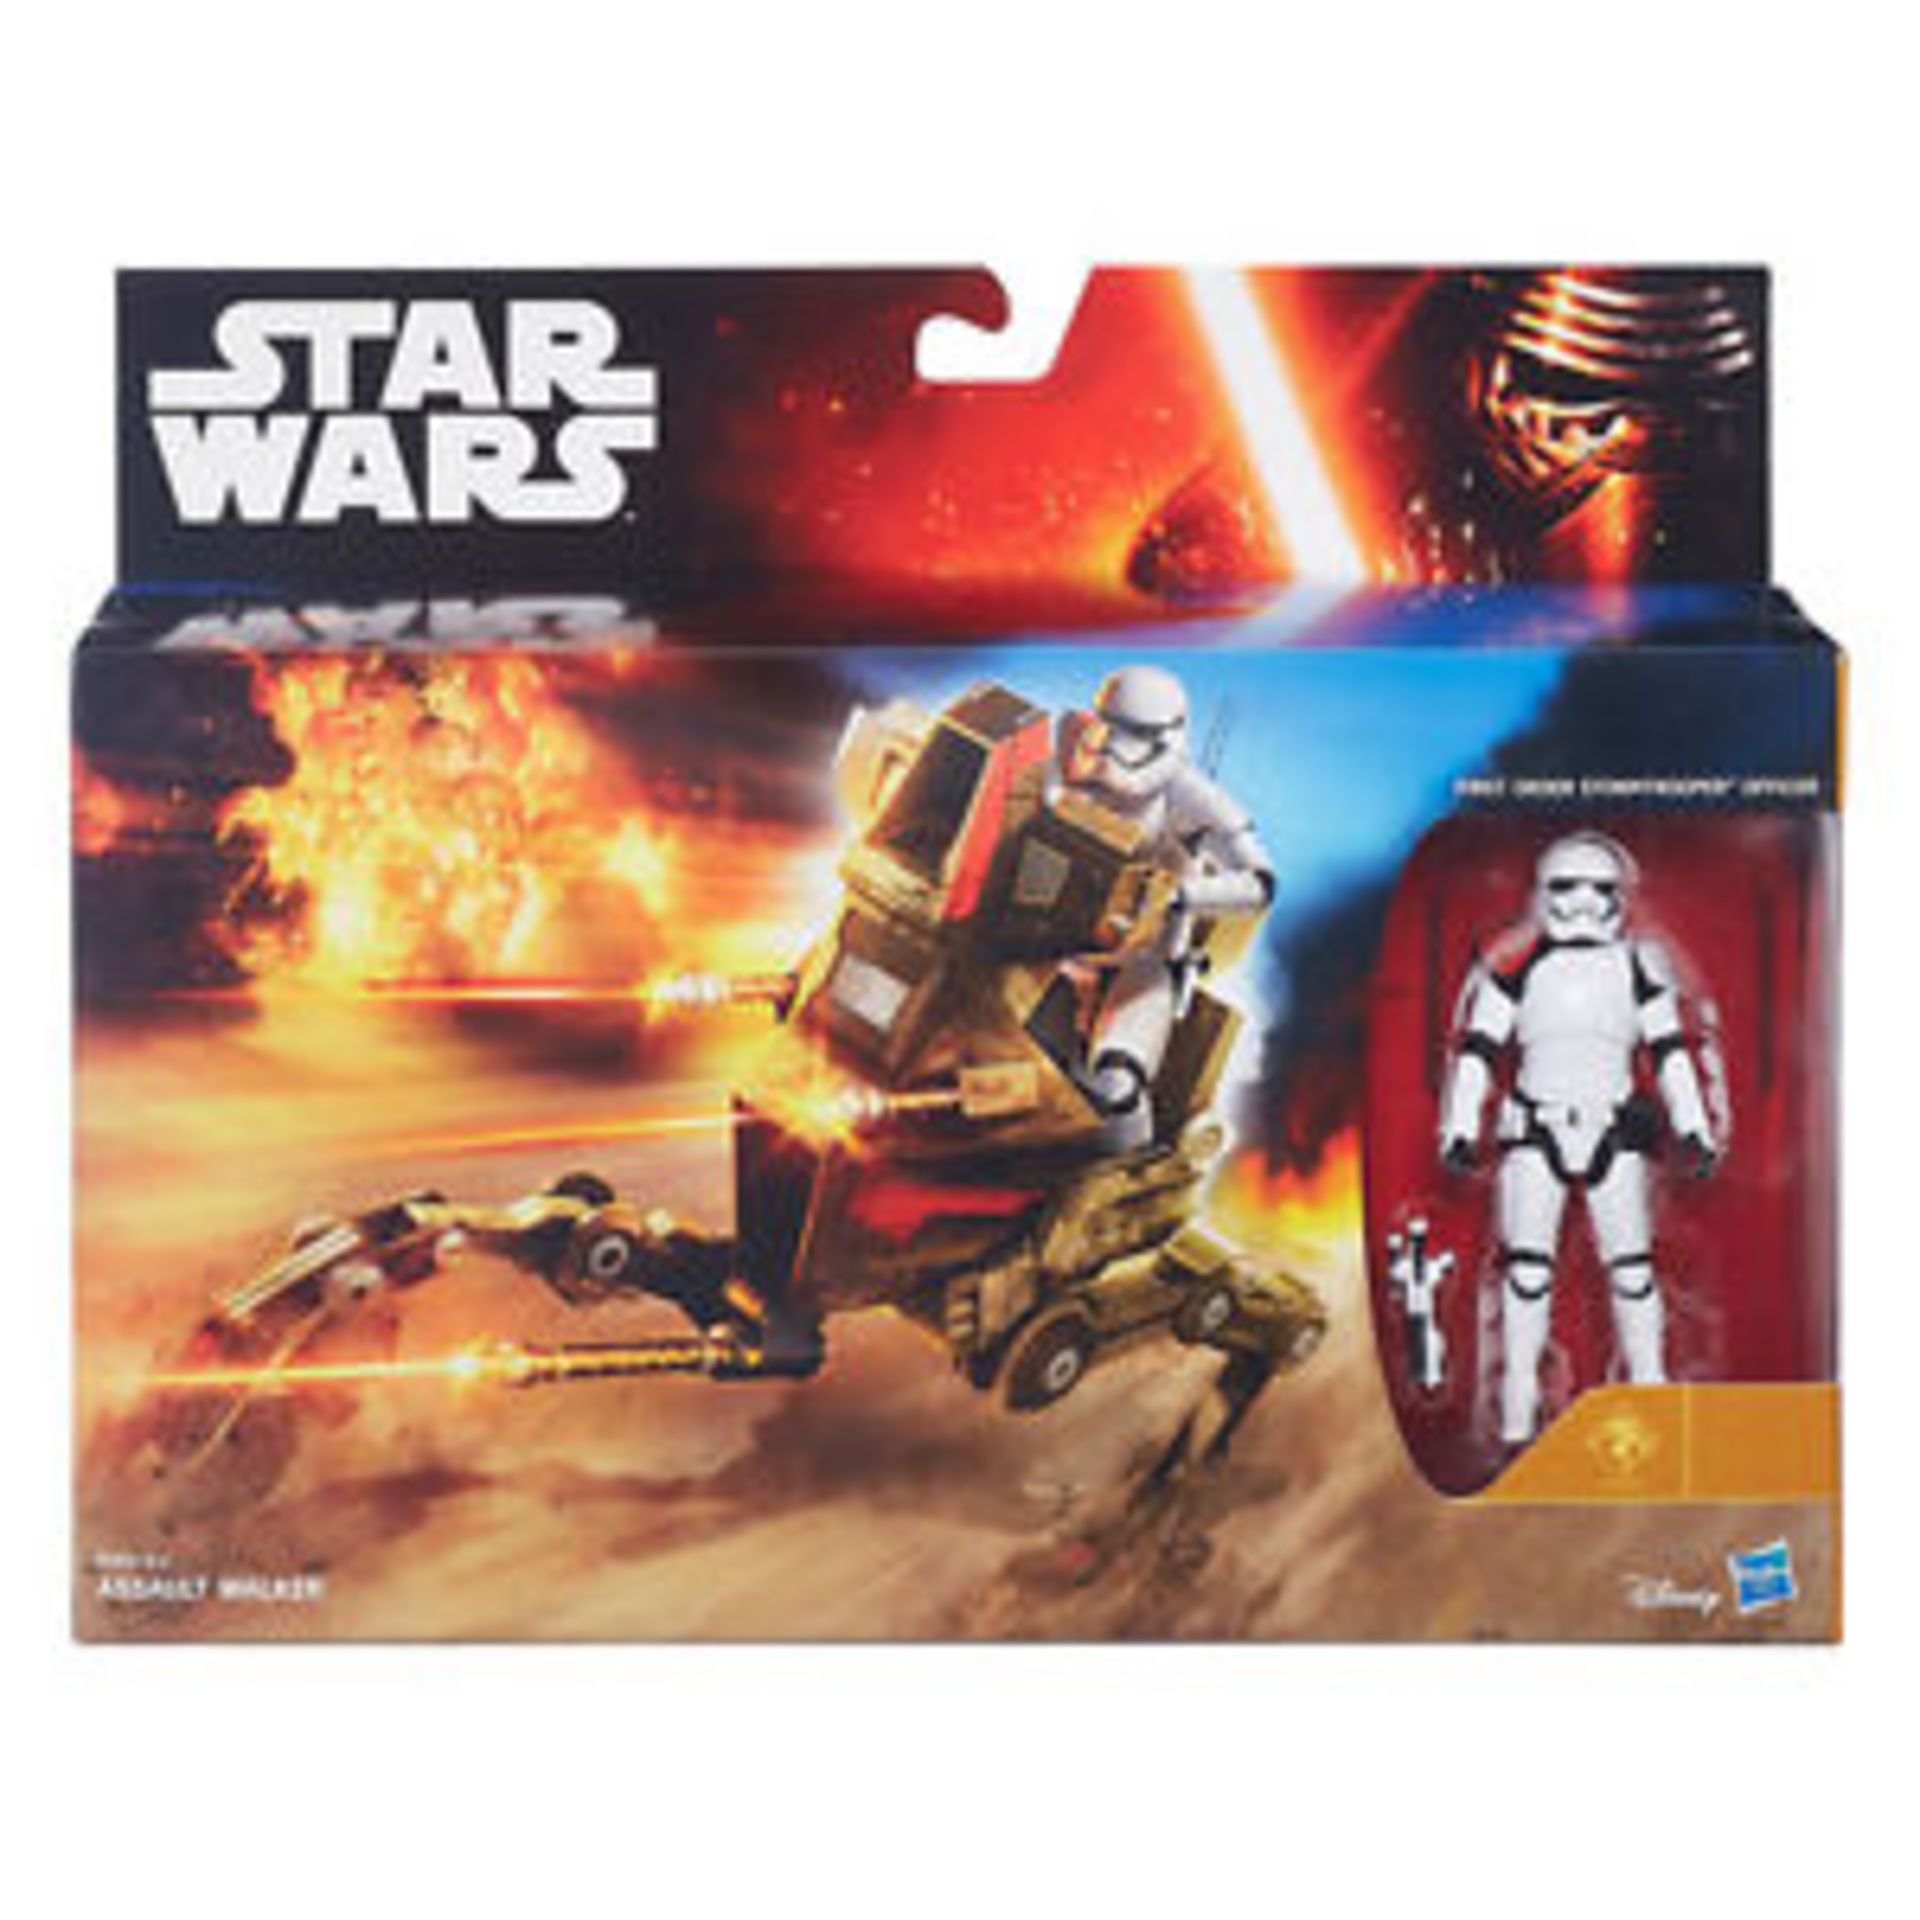 + VAT Brand New Star Wars The Force Awakens Desert Assault Walker - Online Price £32.99 (My Geek - Image 2 of 2